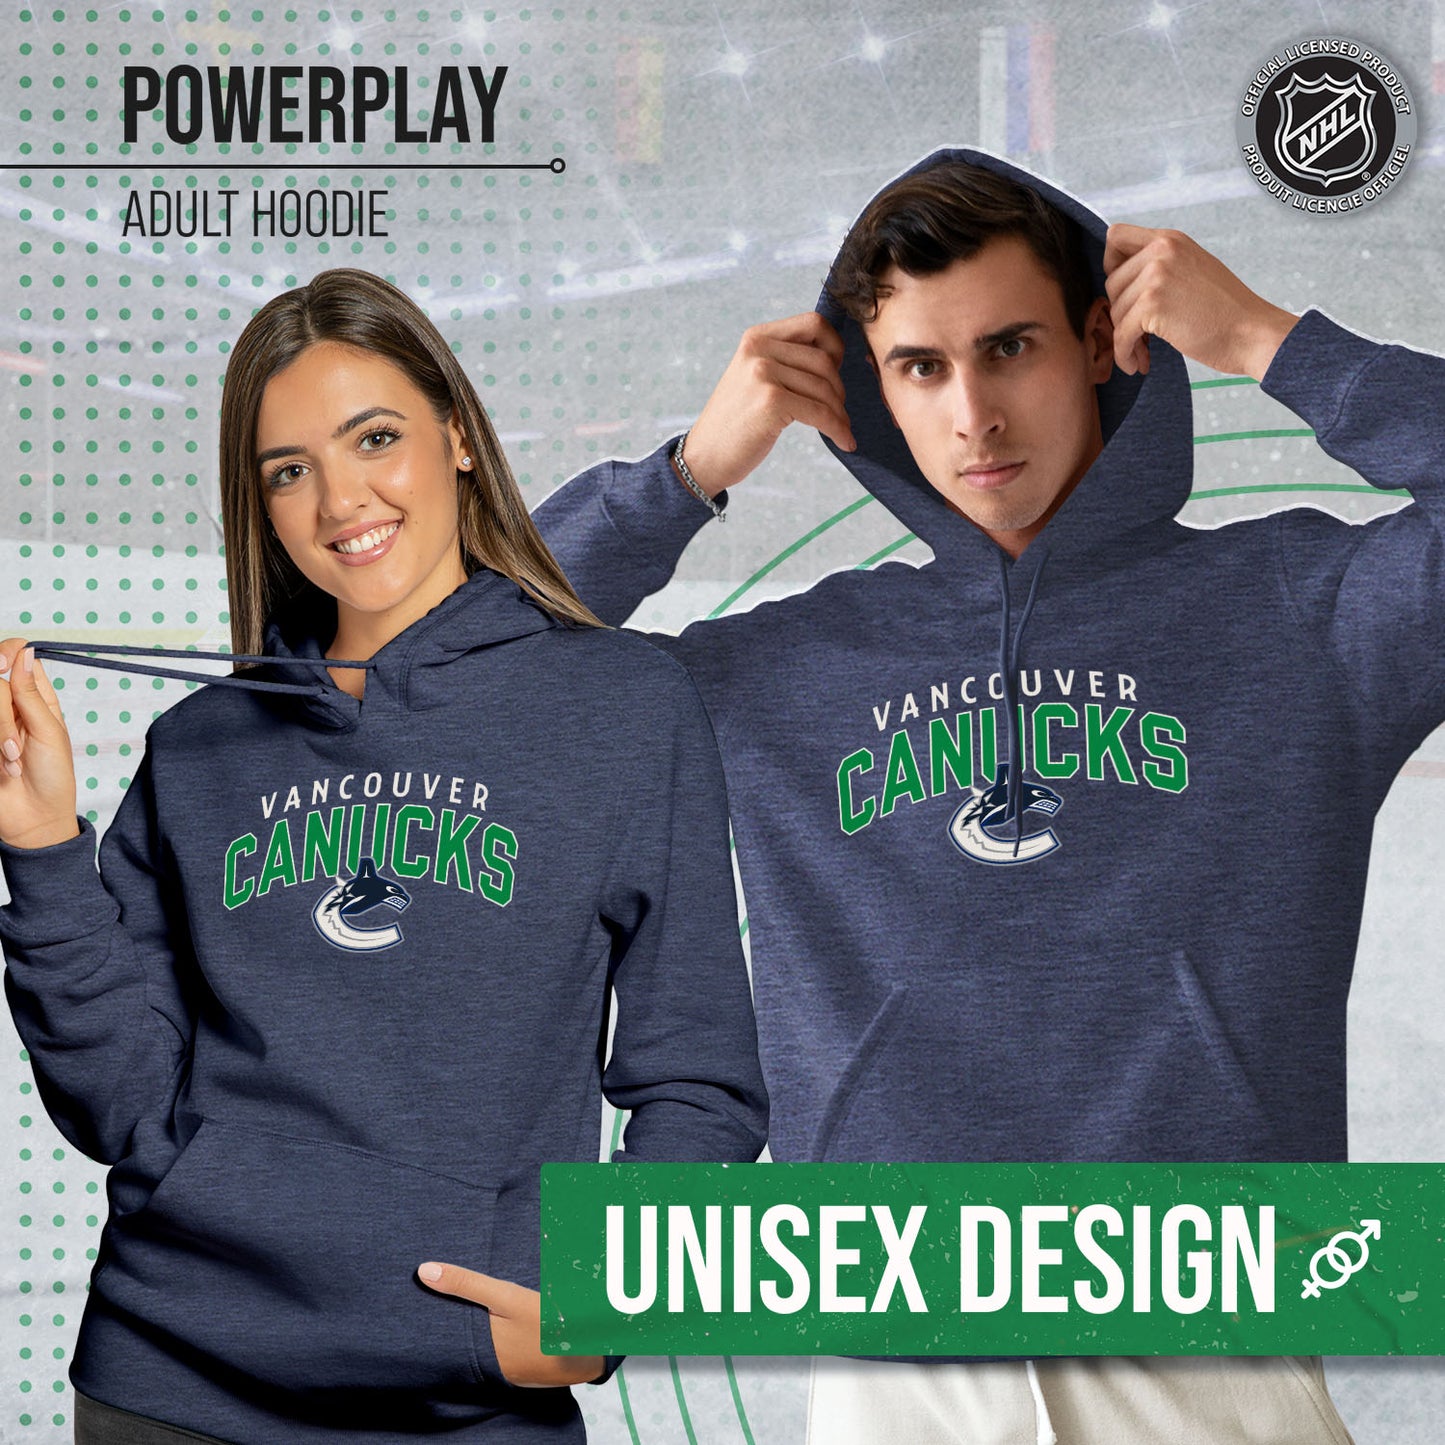 Vancouver Canucks NHL Adult Unisex Powerplay Hooded Sweatshirt - Navy